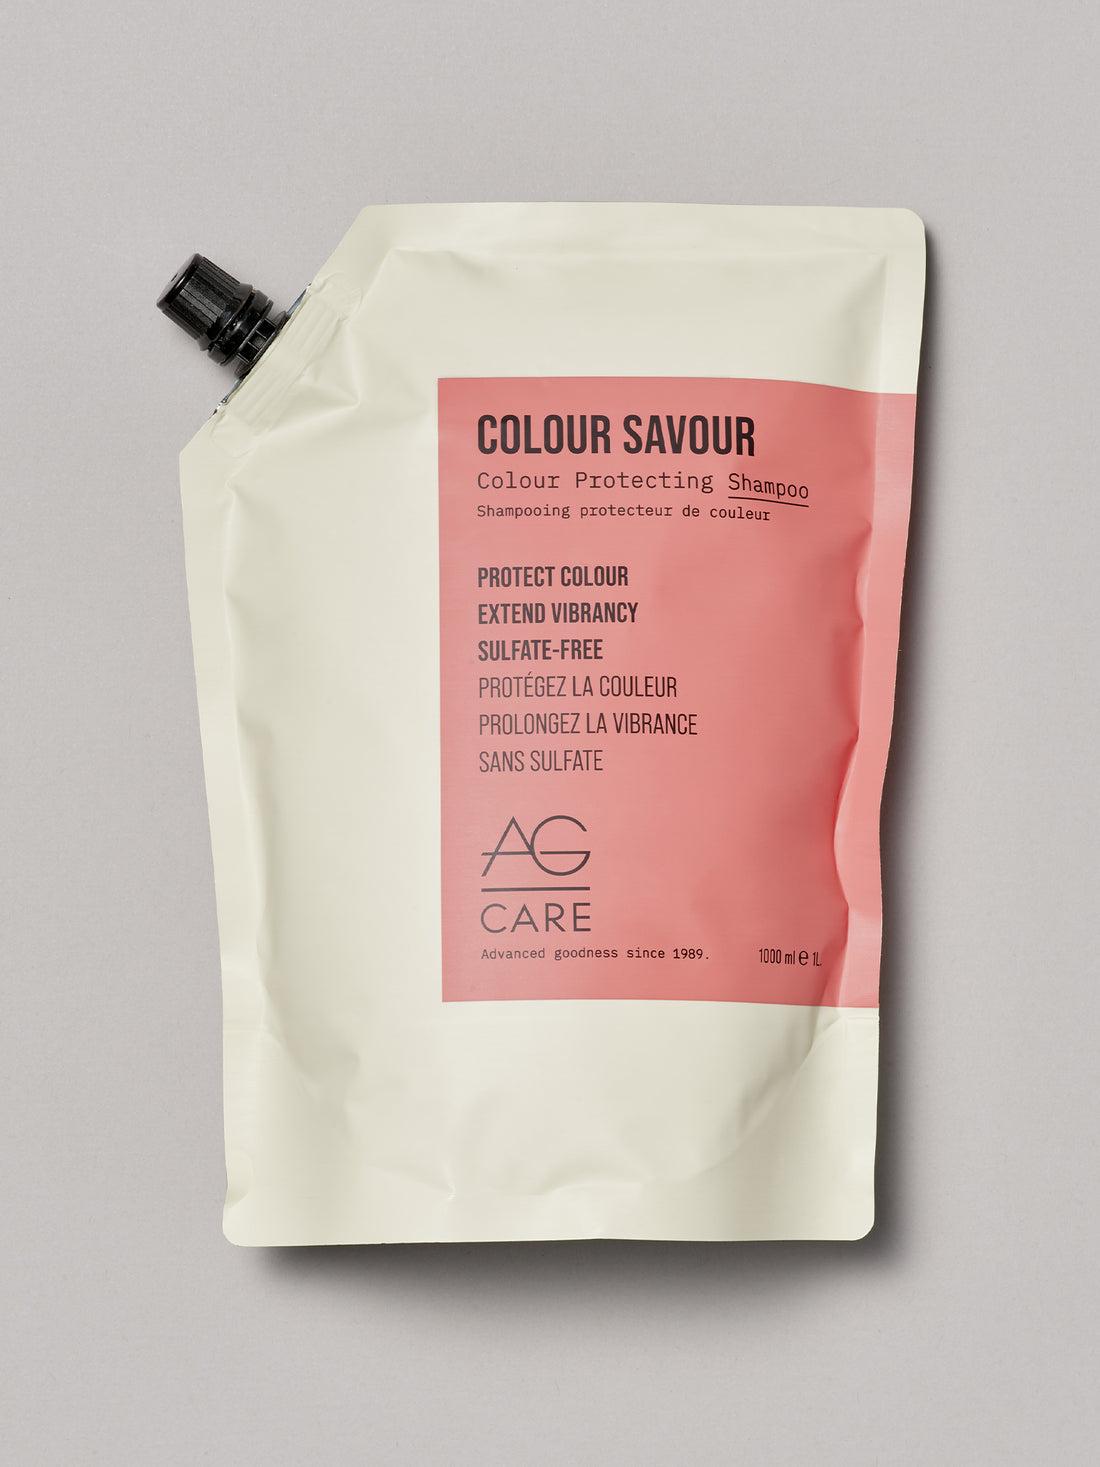 COLOUR SAVOUR Colour Protecting Shampoo